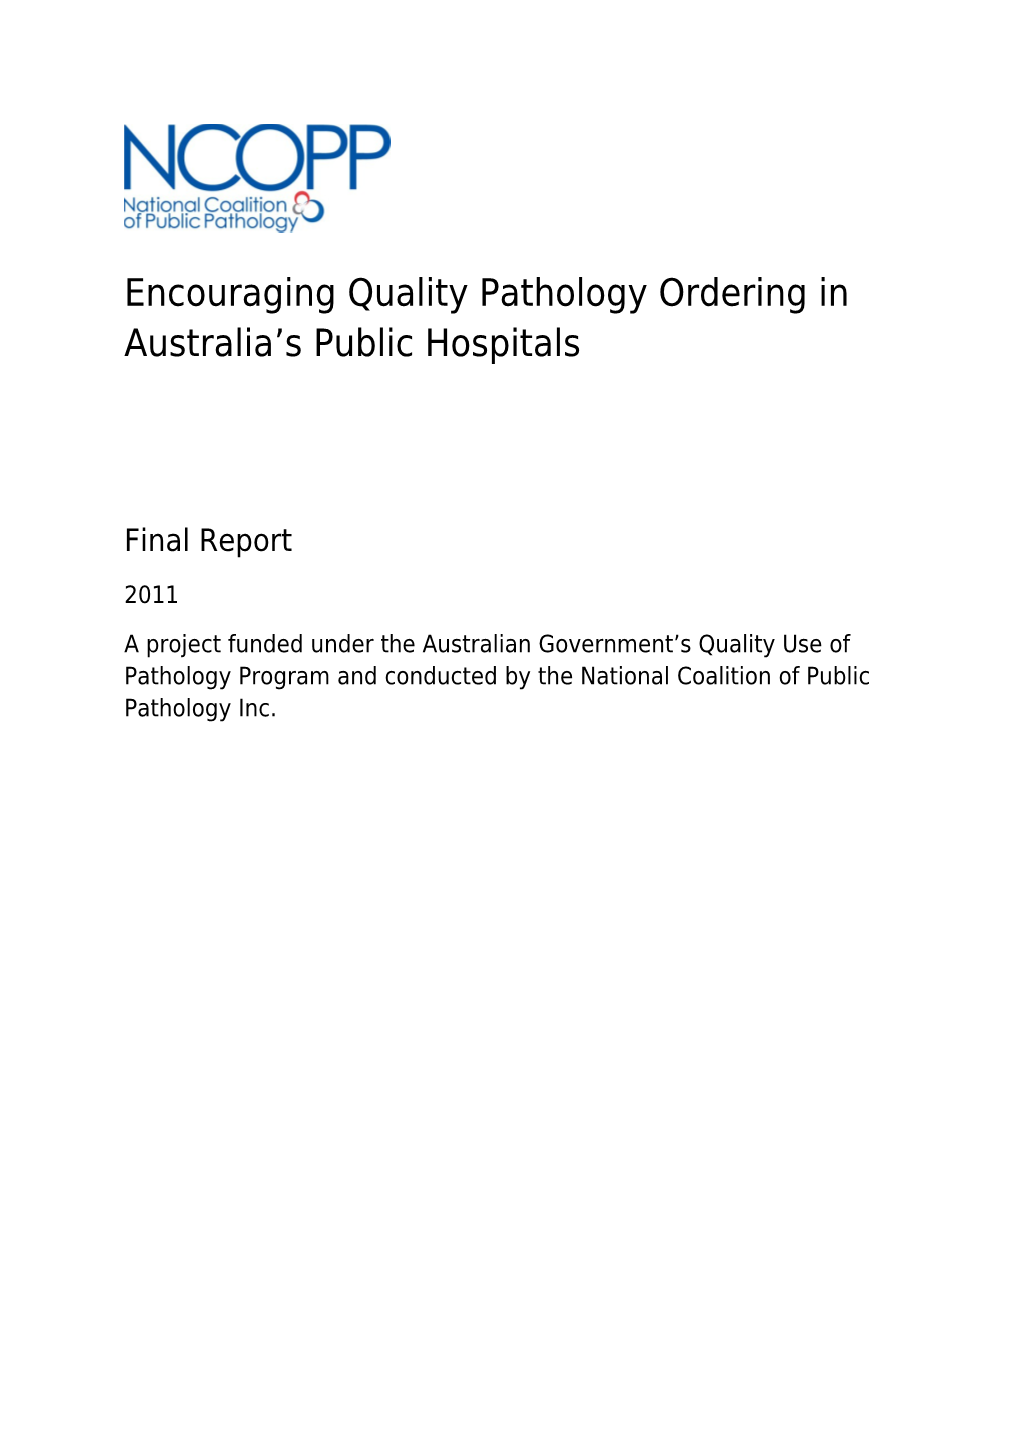 Encouraging Quality Pathology Ordering in Australia S Public Hospitals